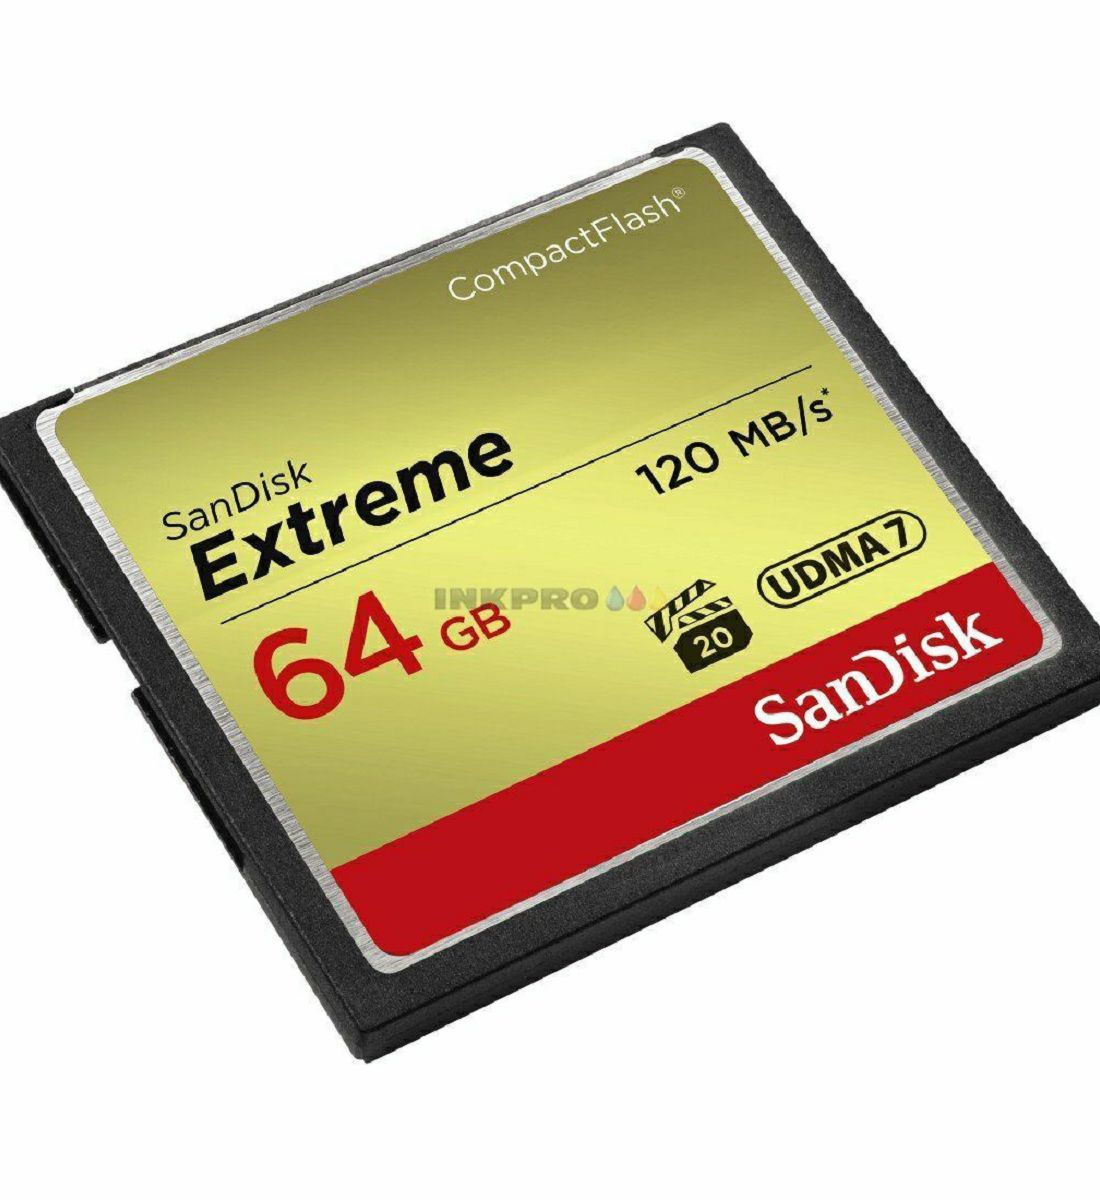 SanDisk CF 64GB 120MB/s 85MB/s write Extreme UDMA7 memorijska kartica (SDCFXSB-064G-G46)